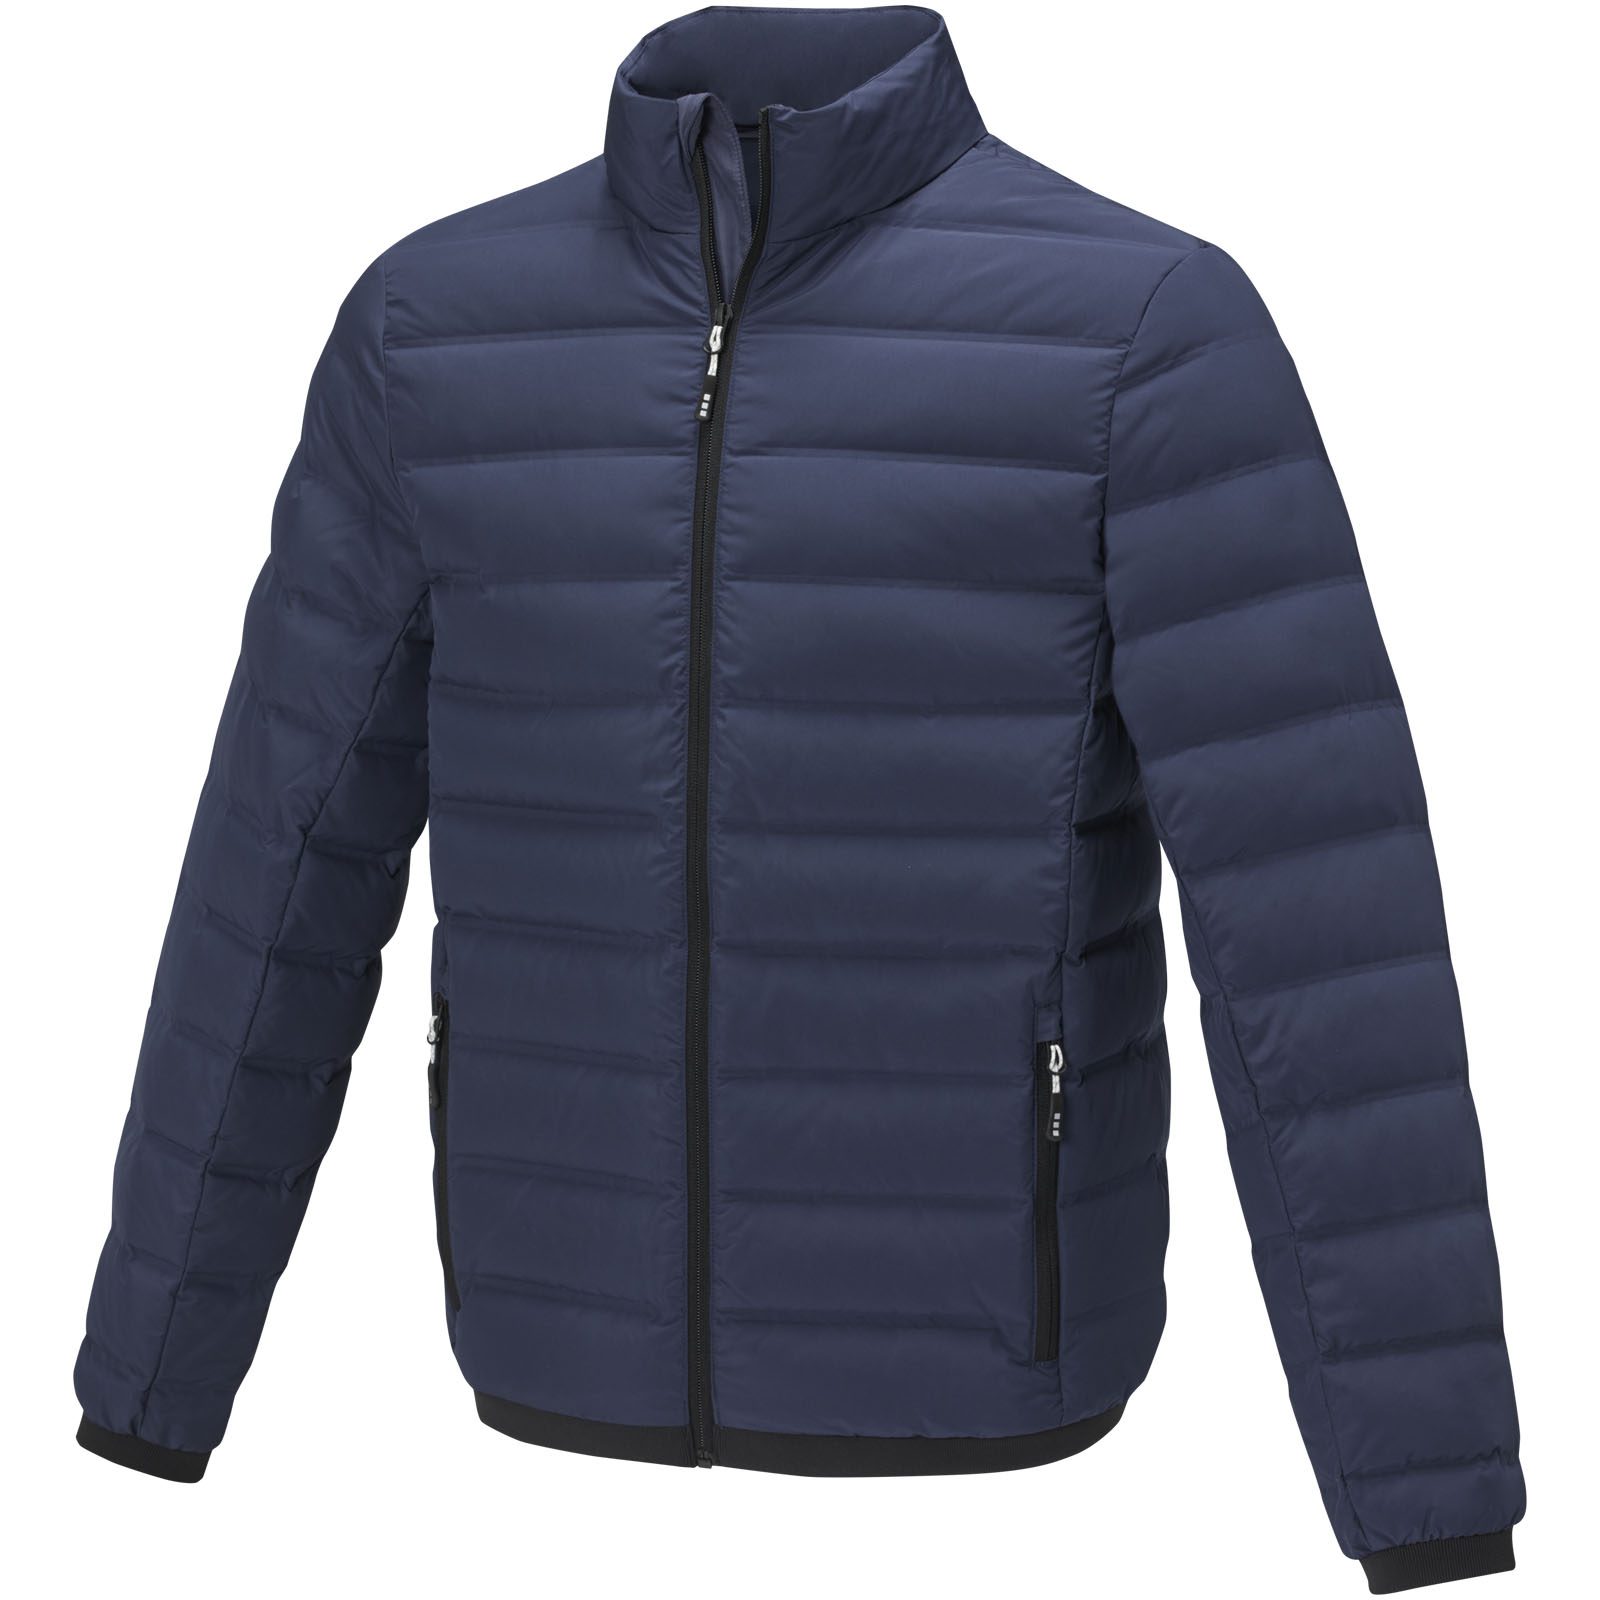 Advertising Jackets - Macin men's insulated down jacket